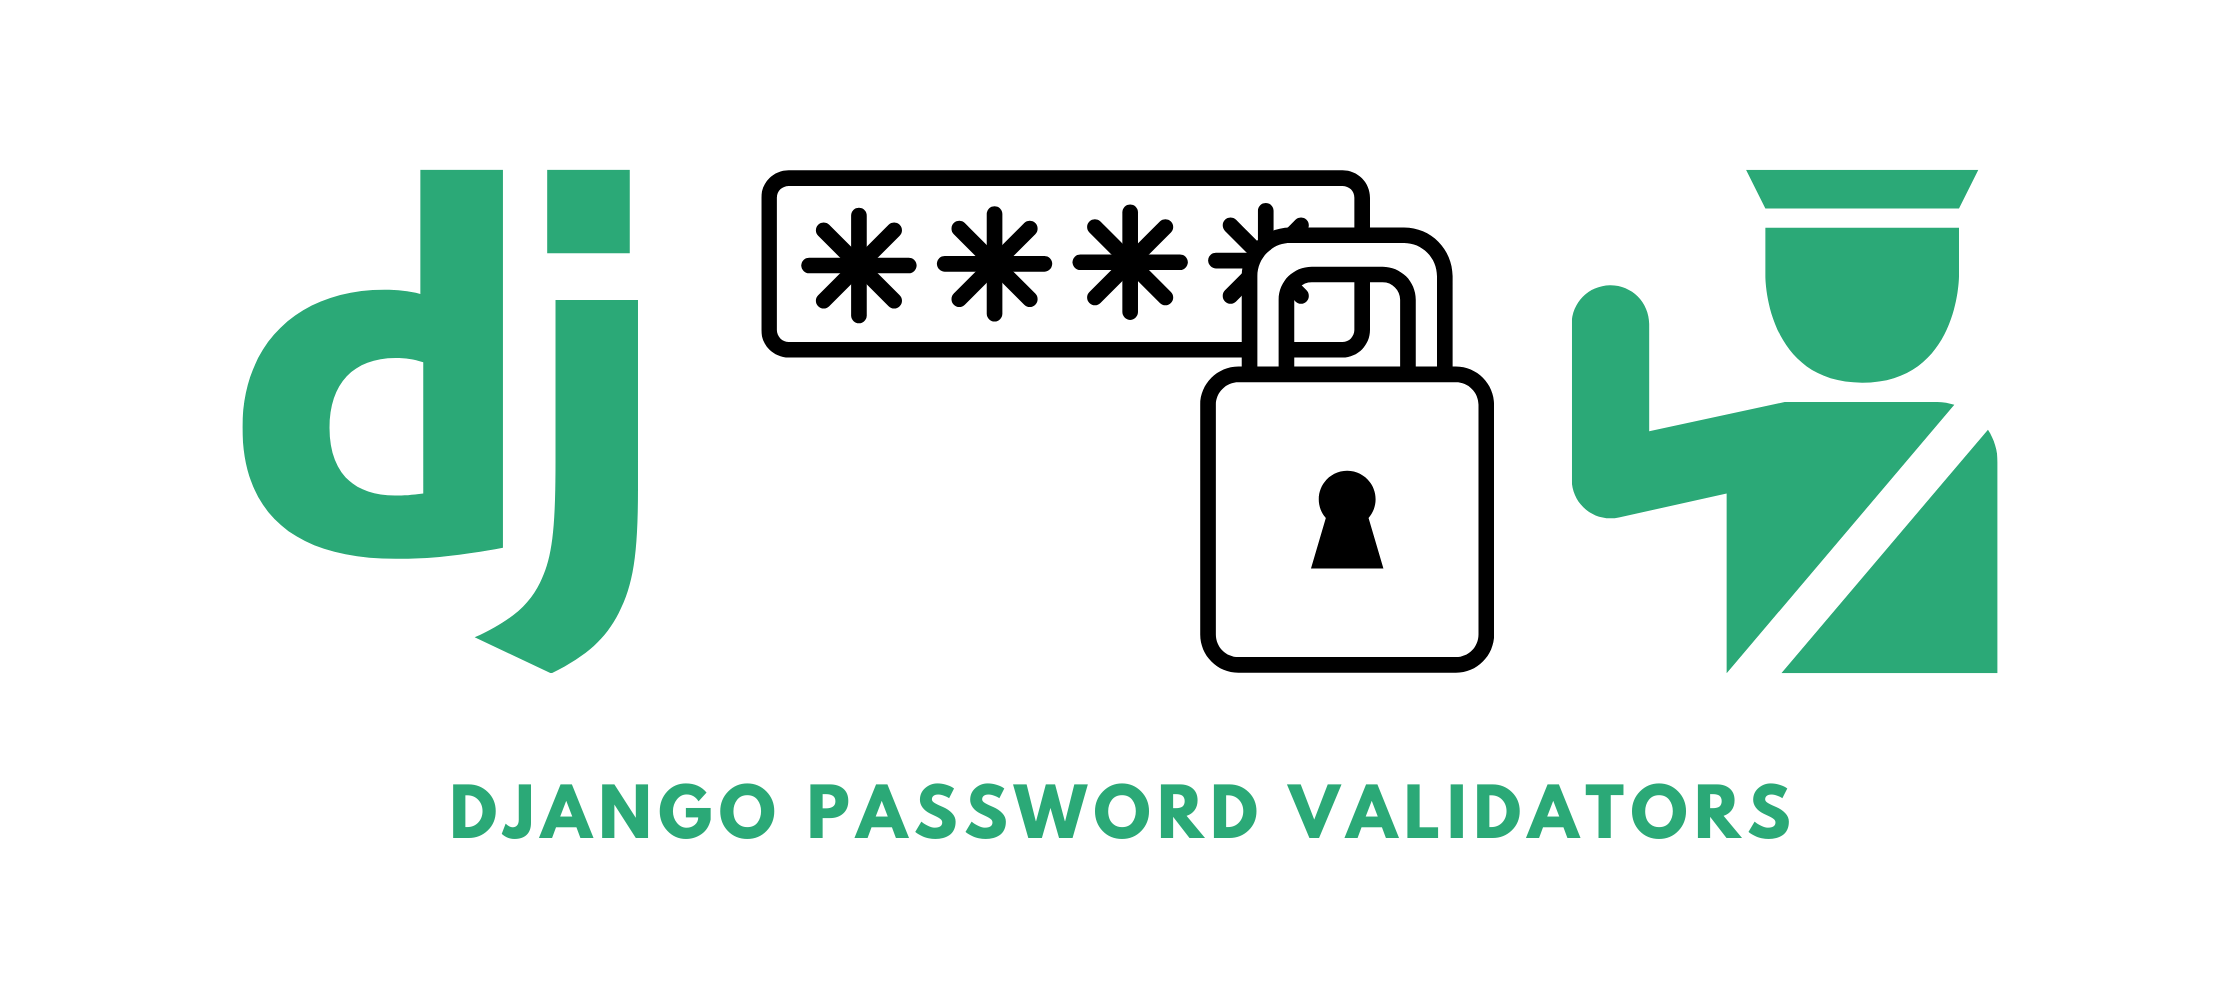 password validators blog header